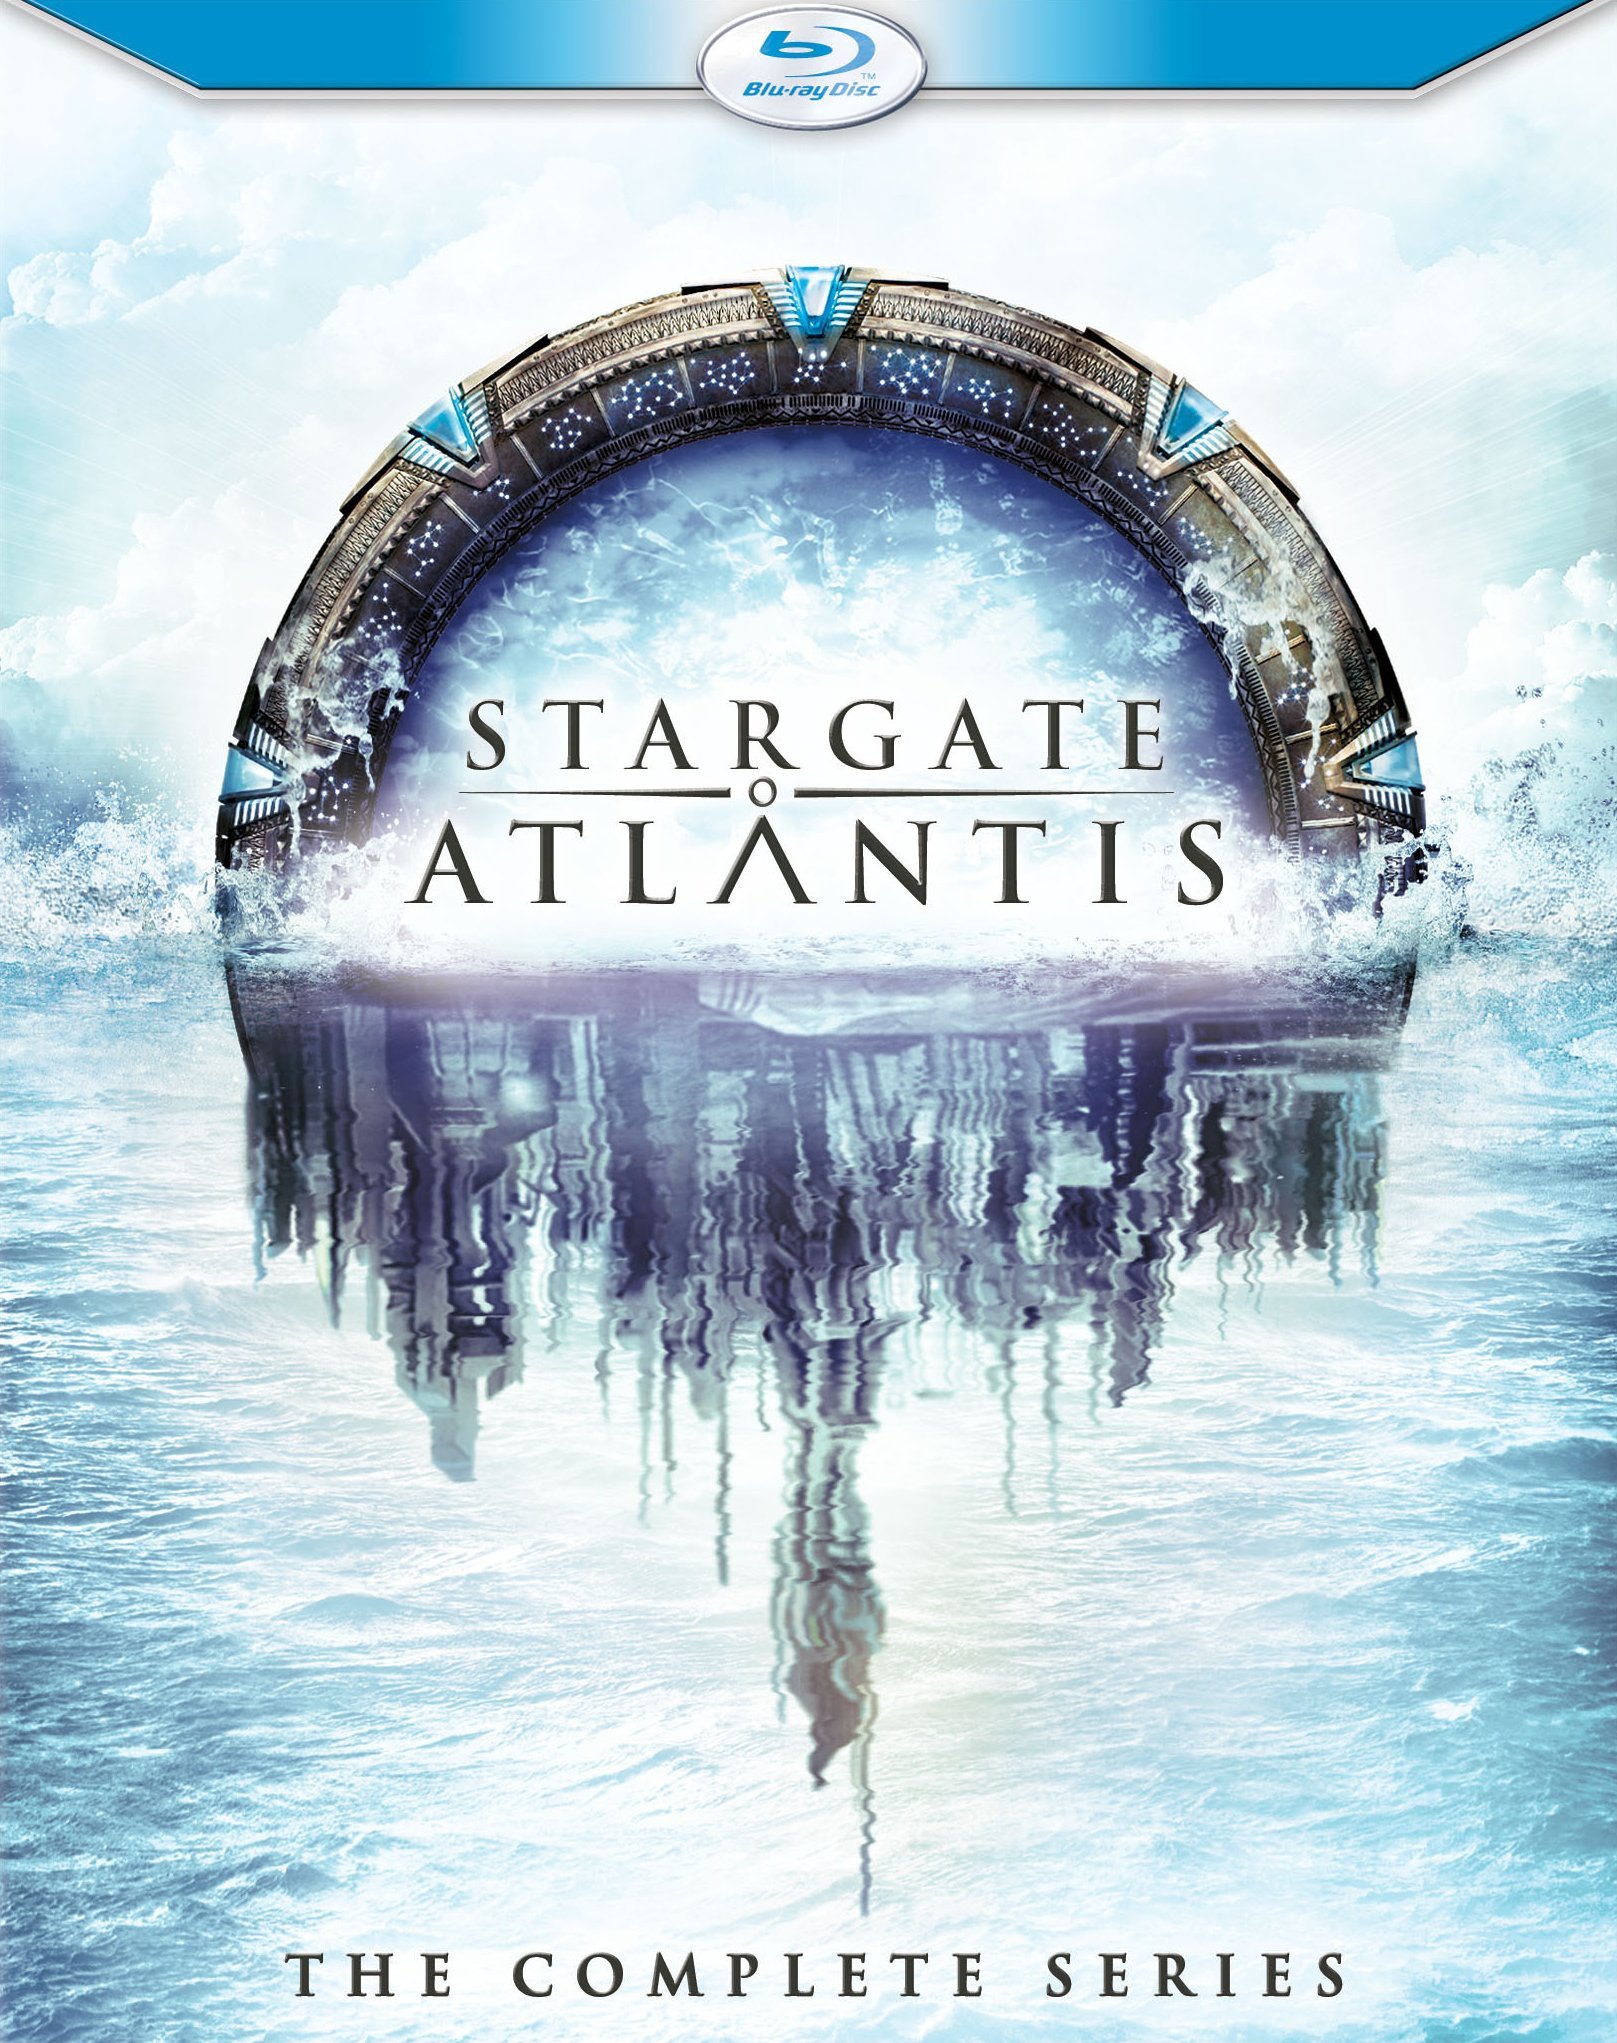 Stargate: Atlantis (TV Series 2004–2009) Stargate: Atlantis (Serie de TV 2004–2009) [E-AC3 5.1/2.0 + SRT] [MGM Channel] 23182_front